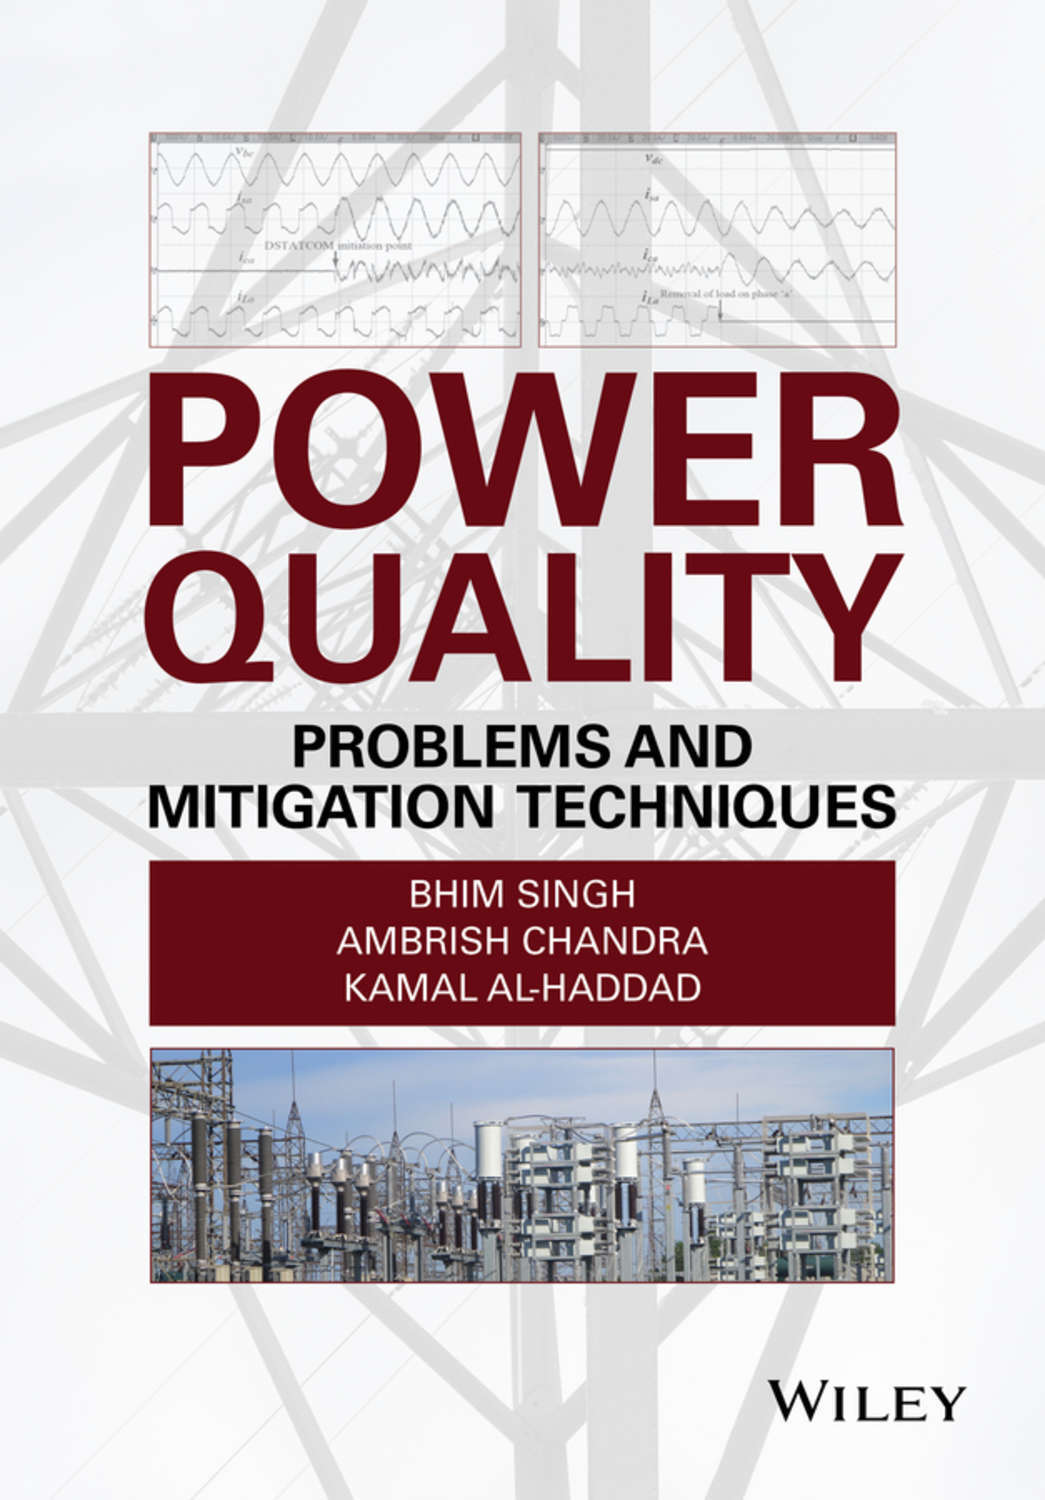 Quality problems. Power книга. Power quality.